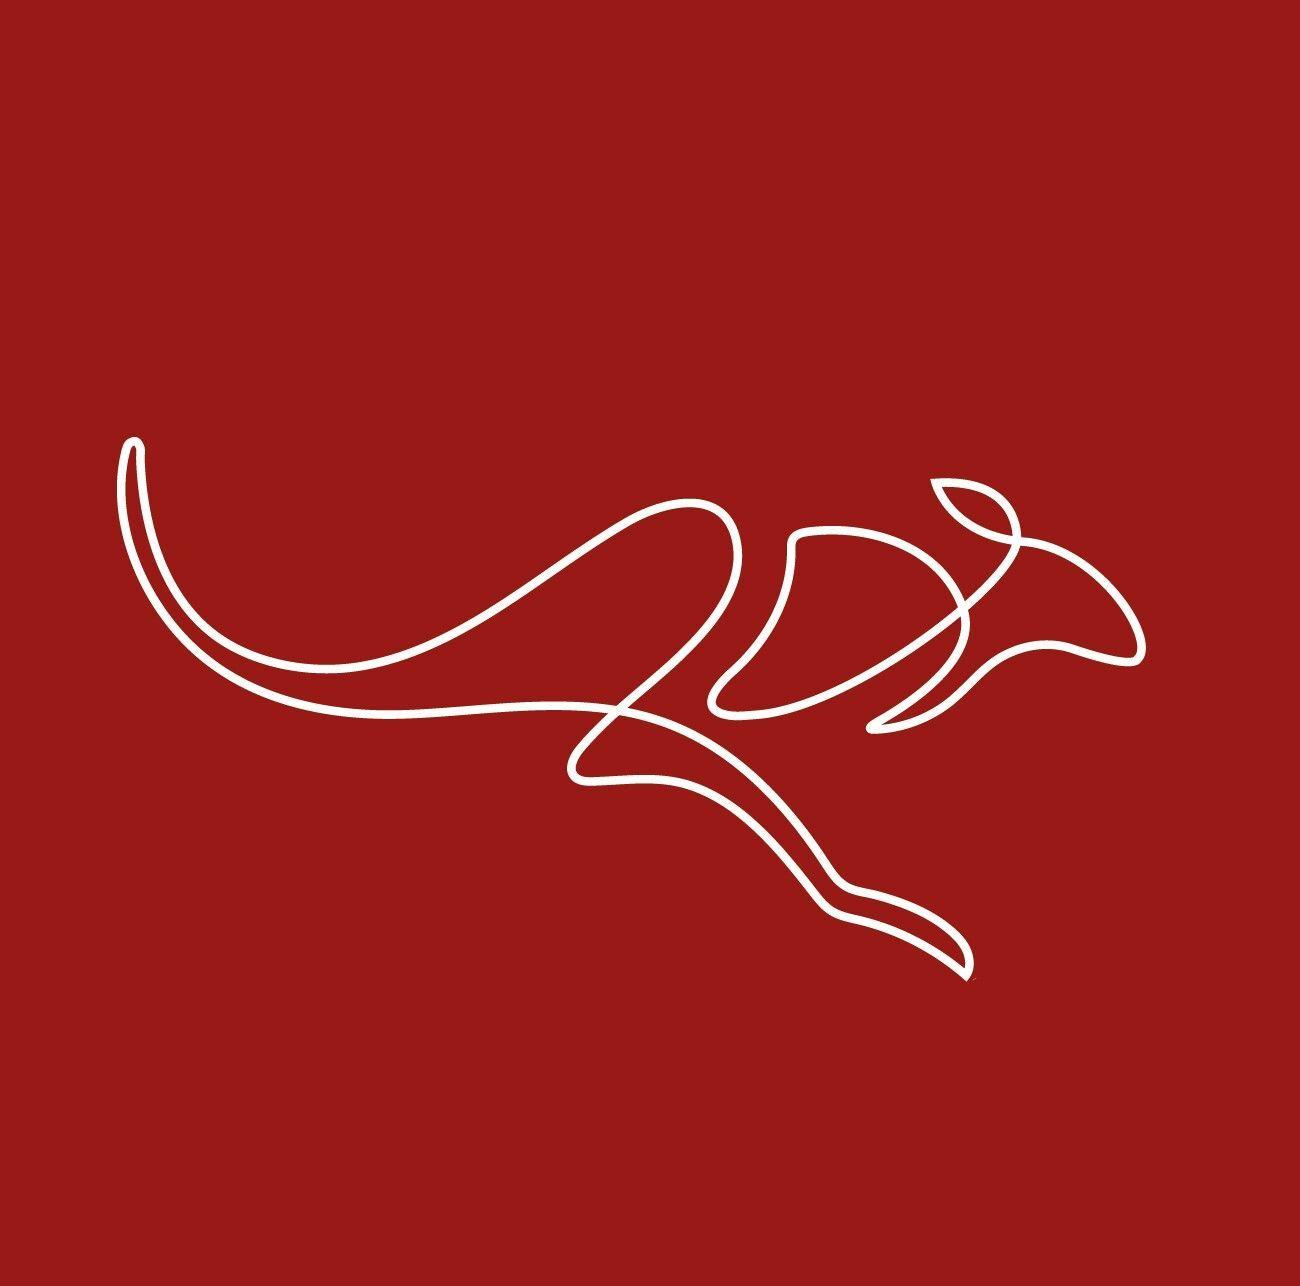 Austin College Kangaroos Logo - Kangaroo. Corporate Identity. Australian tattoo